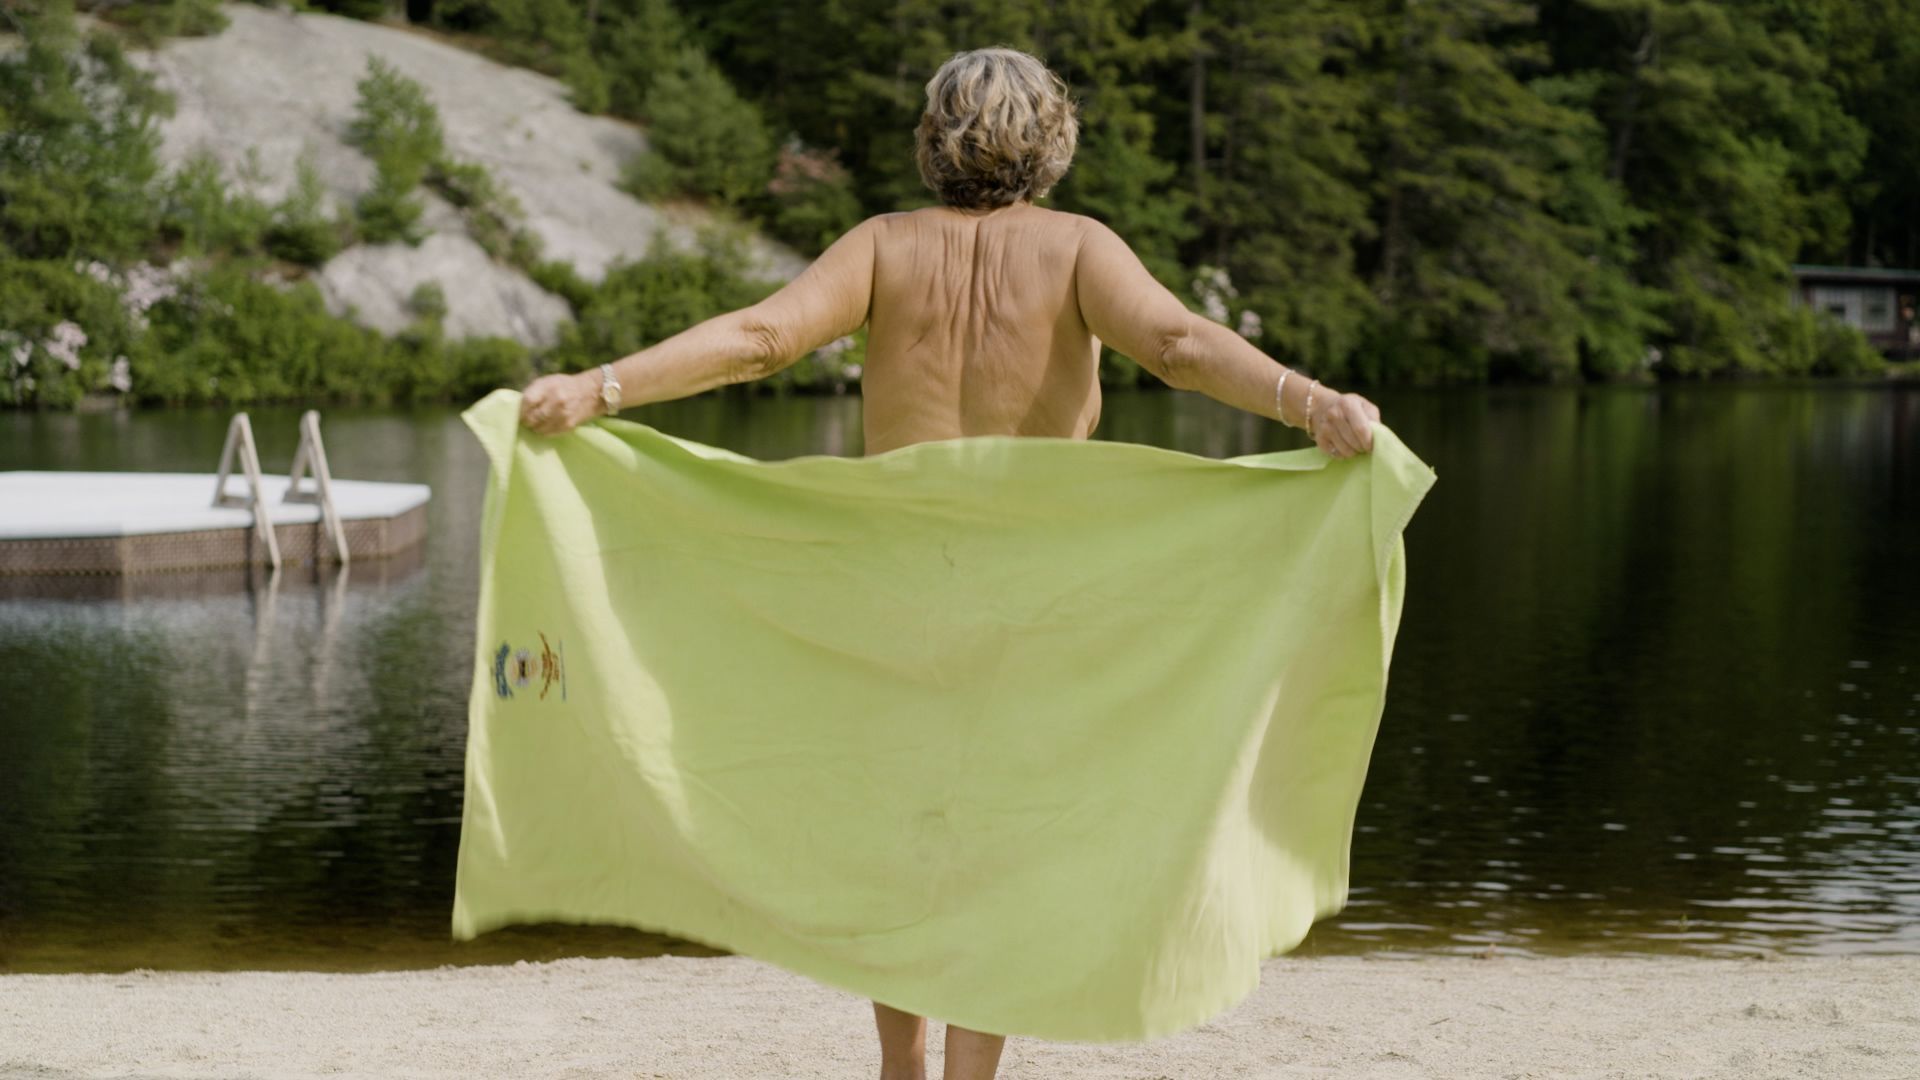 becky ehrenzeller recommends Elderly Nudist Couples